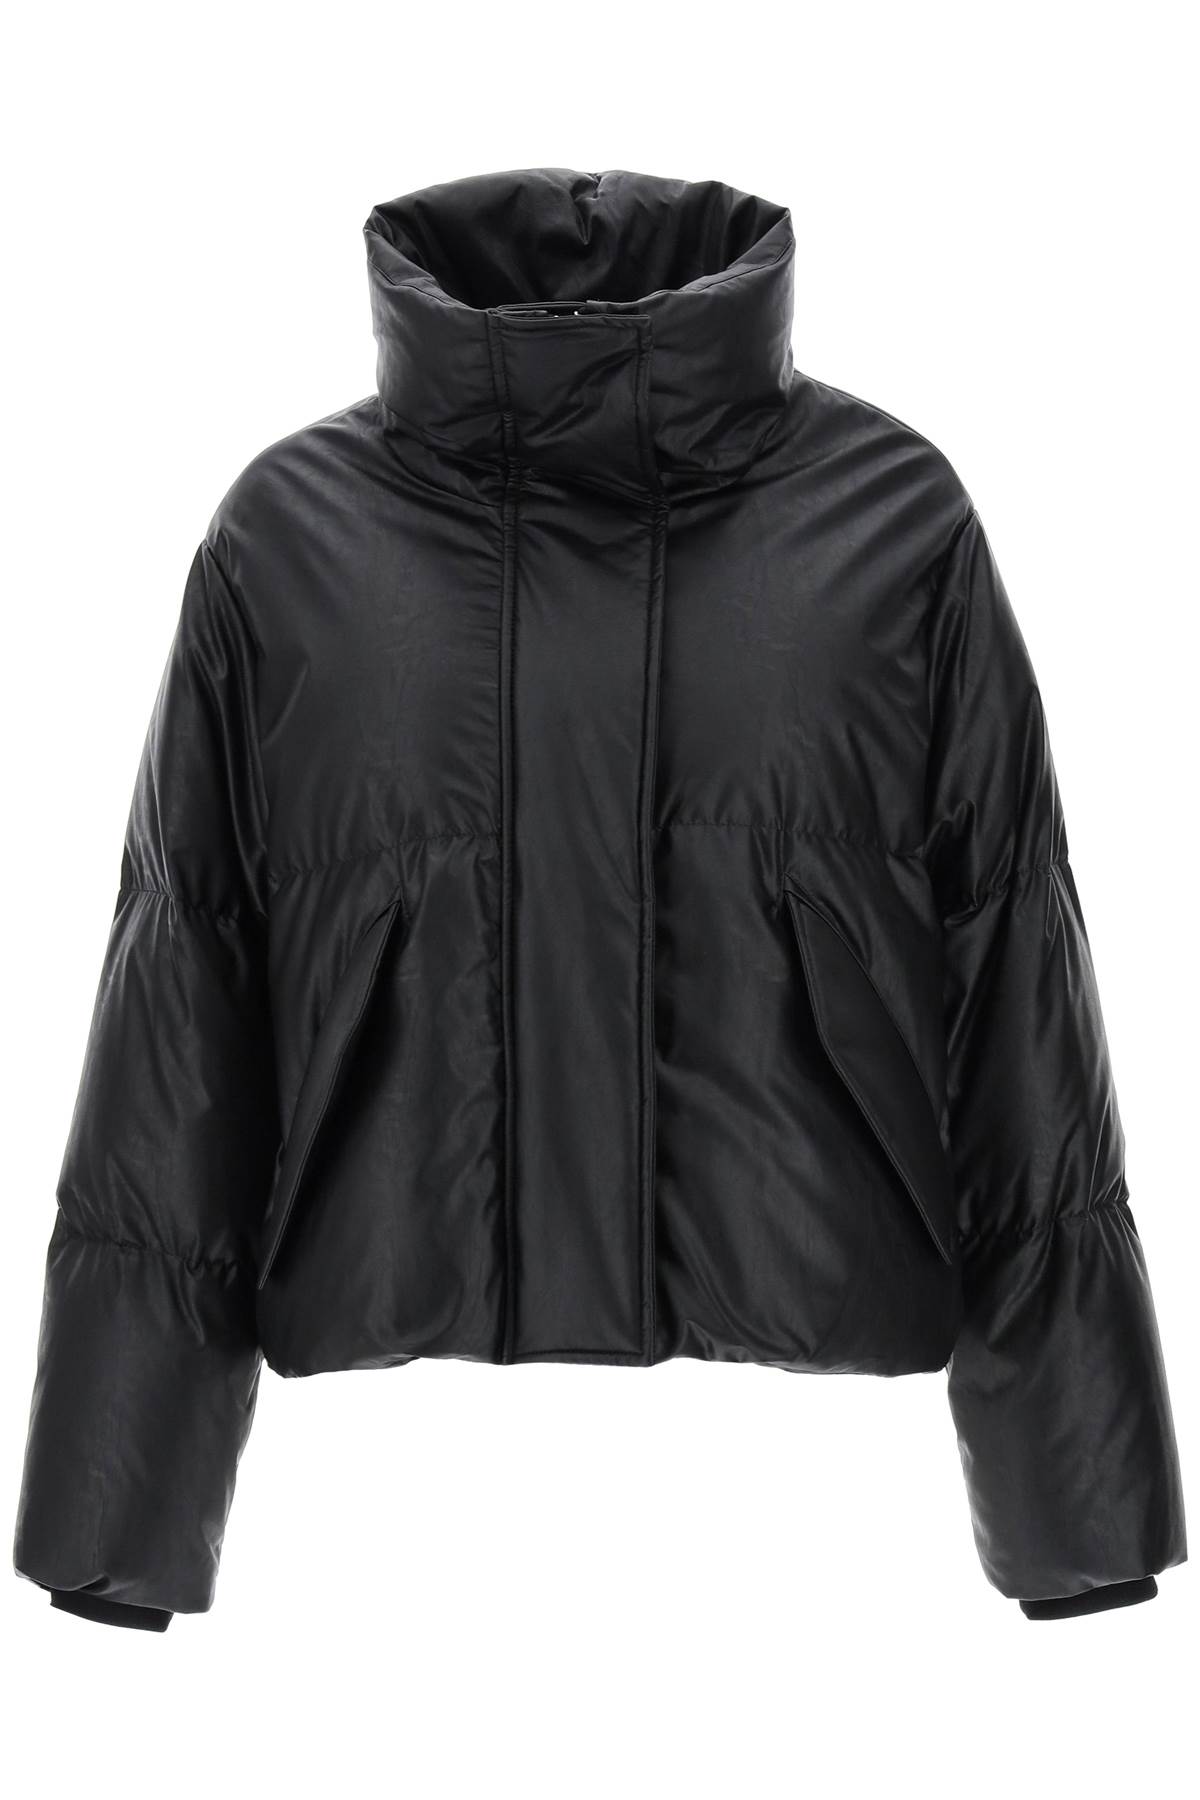 Black Leather-like Jacket